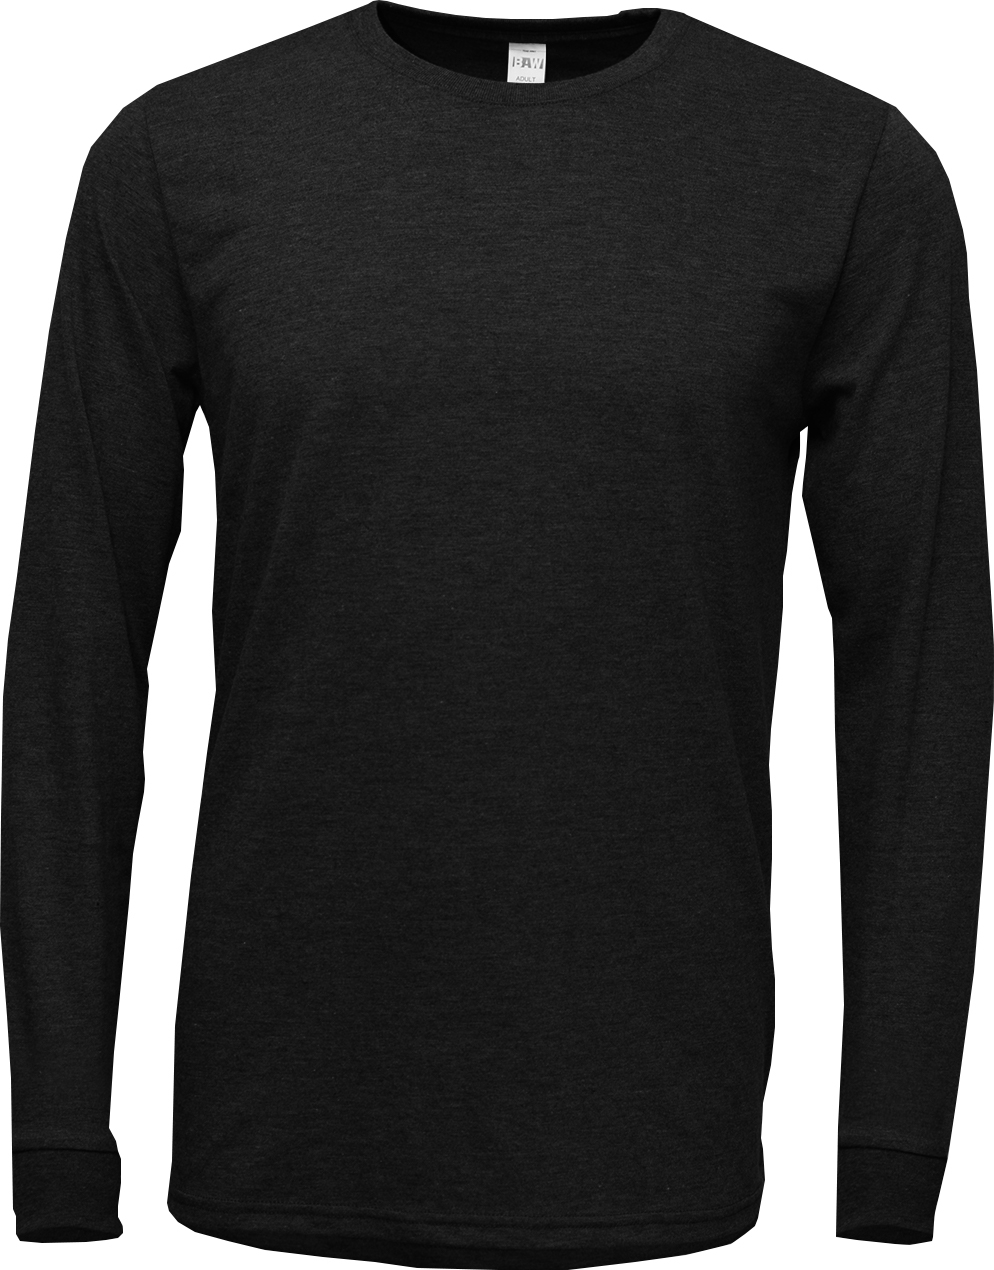 BAW Athletic Wear TR92 - Unisex Tri-Blend T-Shirt Long Sleeve